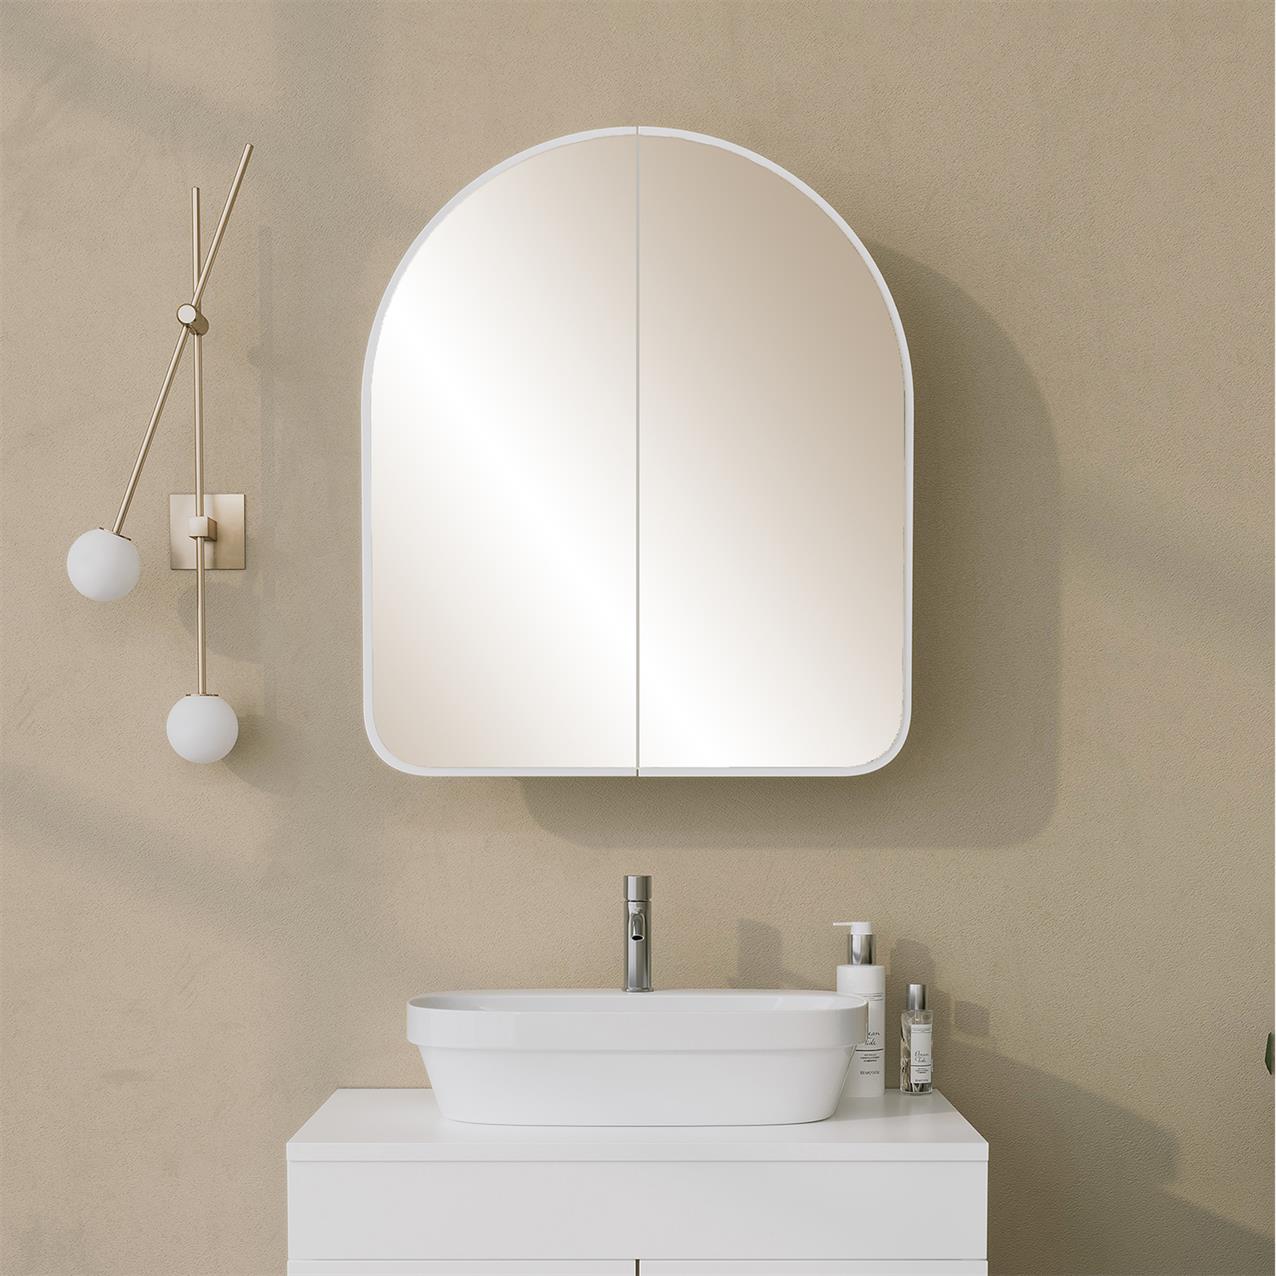 NEOstill - Hope Aynalı Banyo Dolabı / Beyaz 60 cm